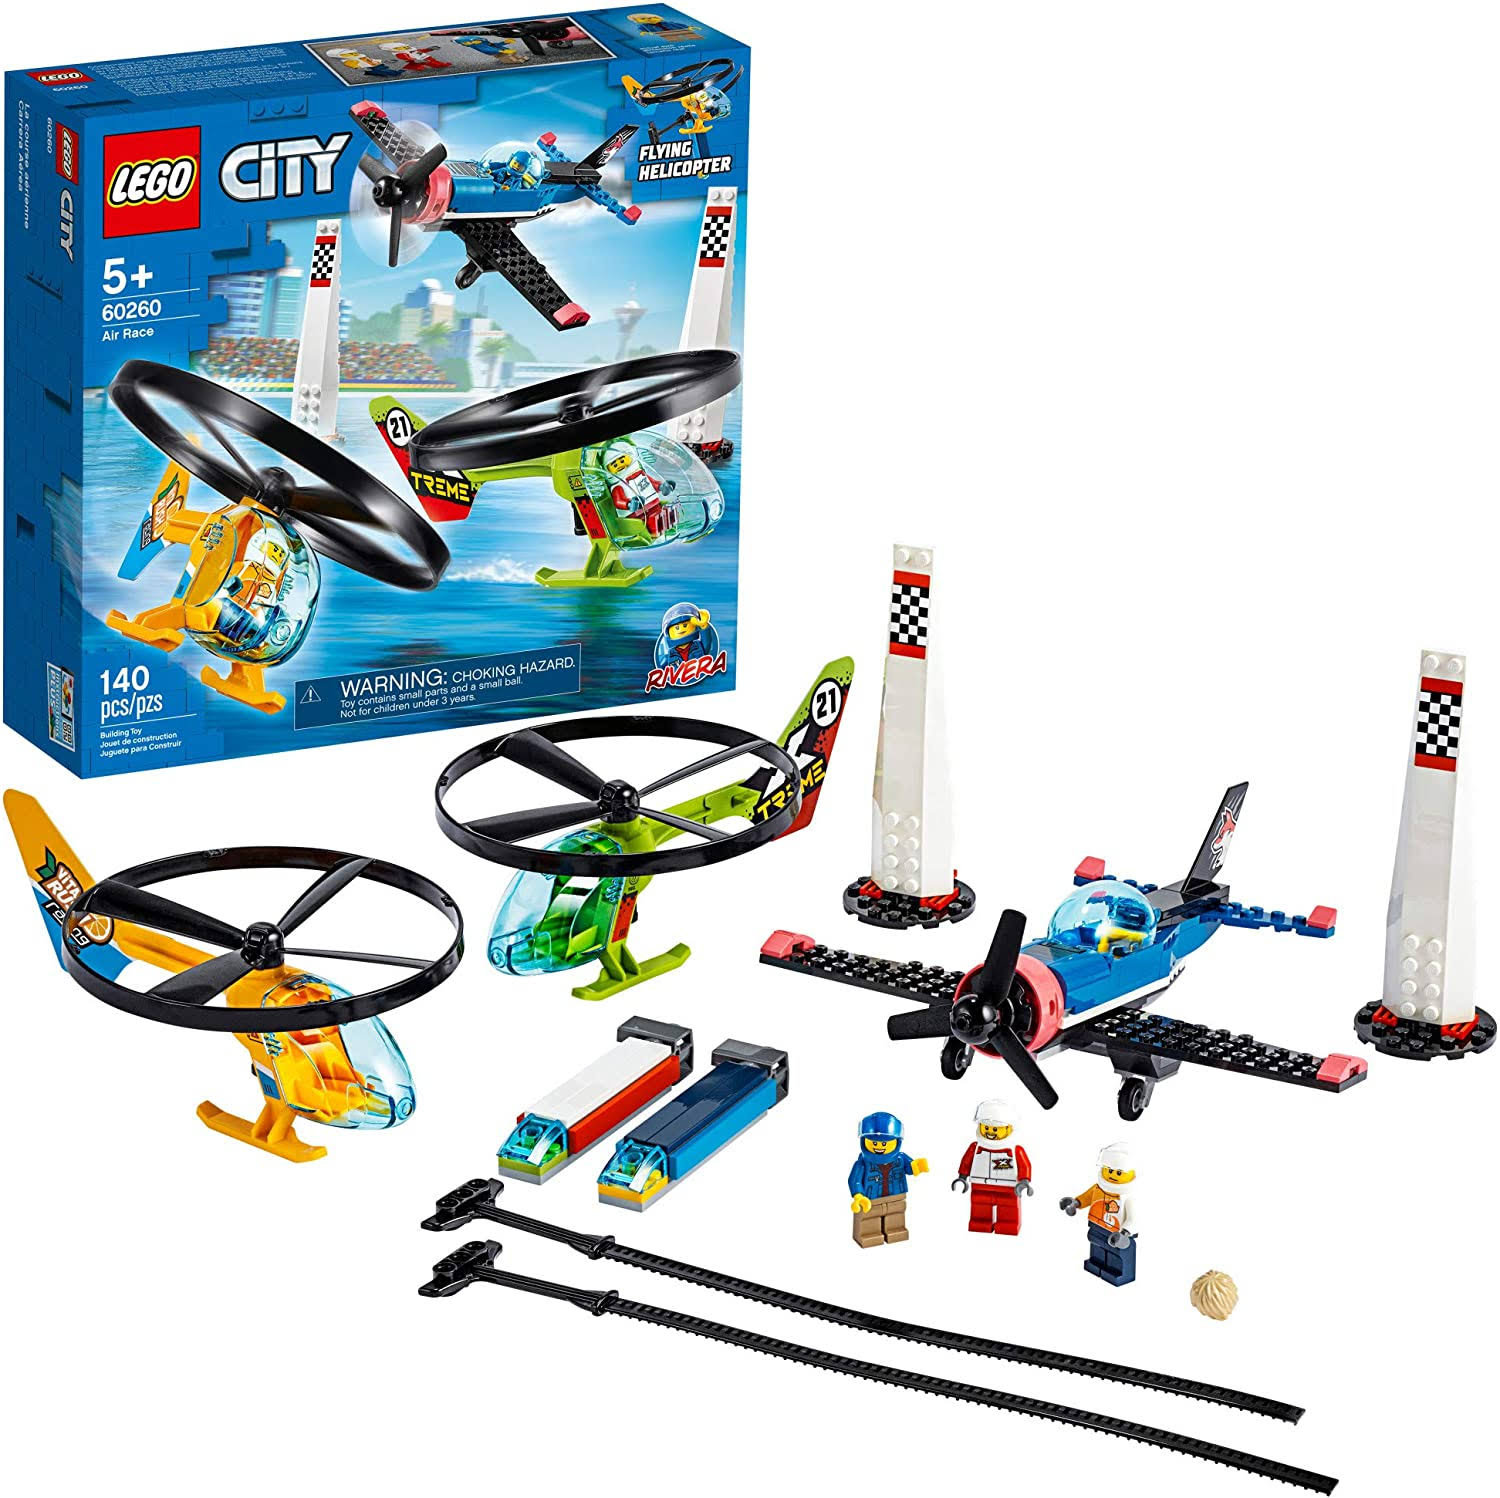 Lego City Set 60260 [ Air Race ] New